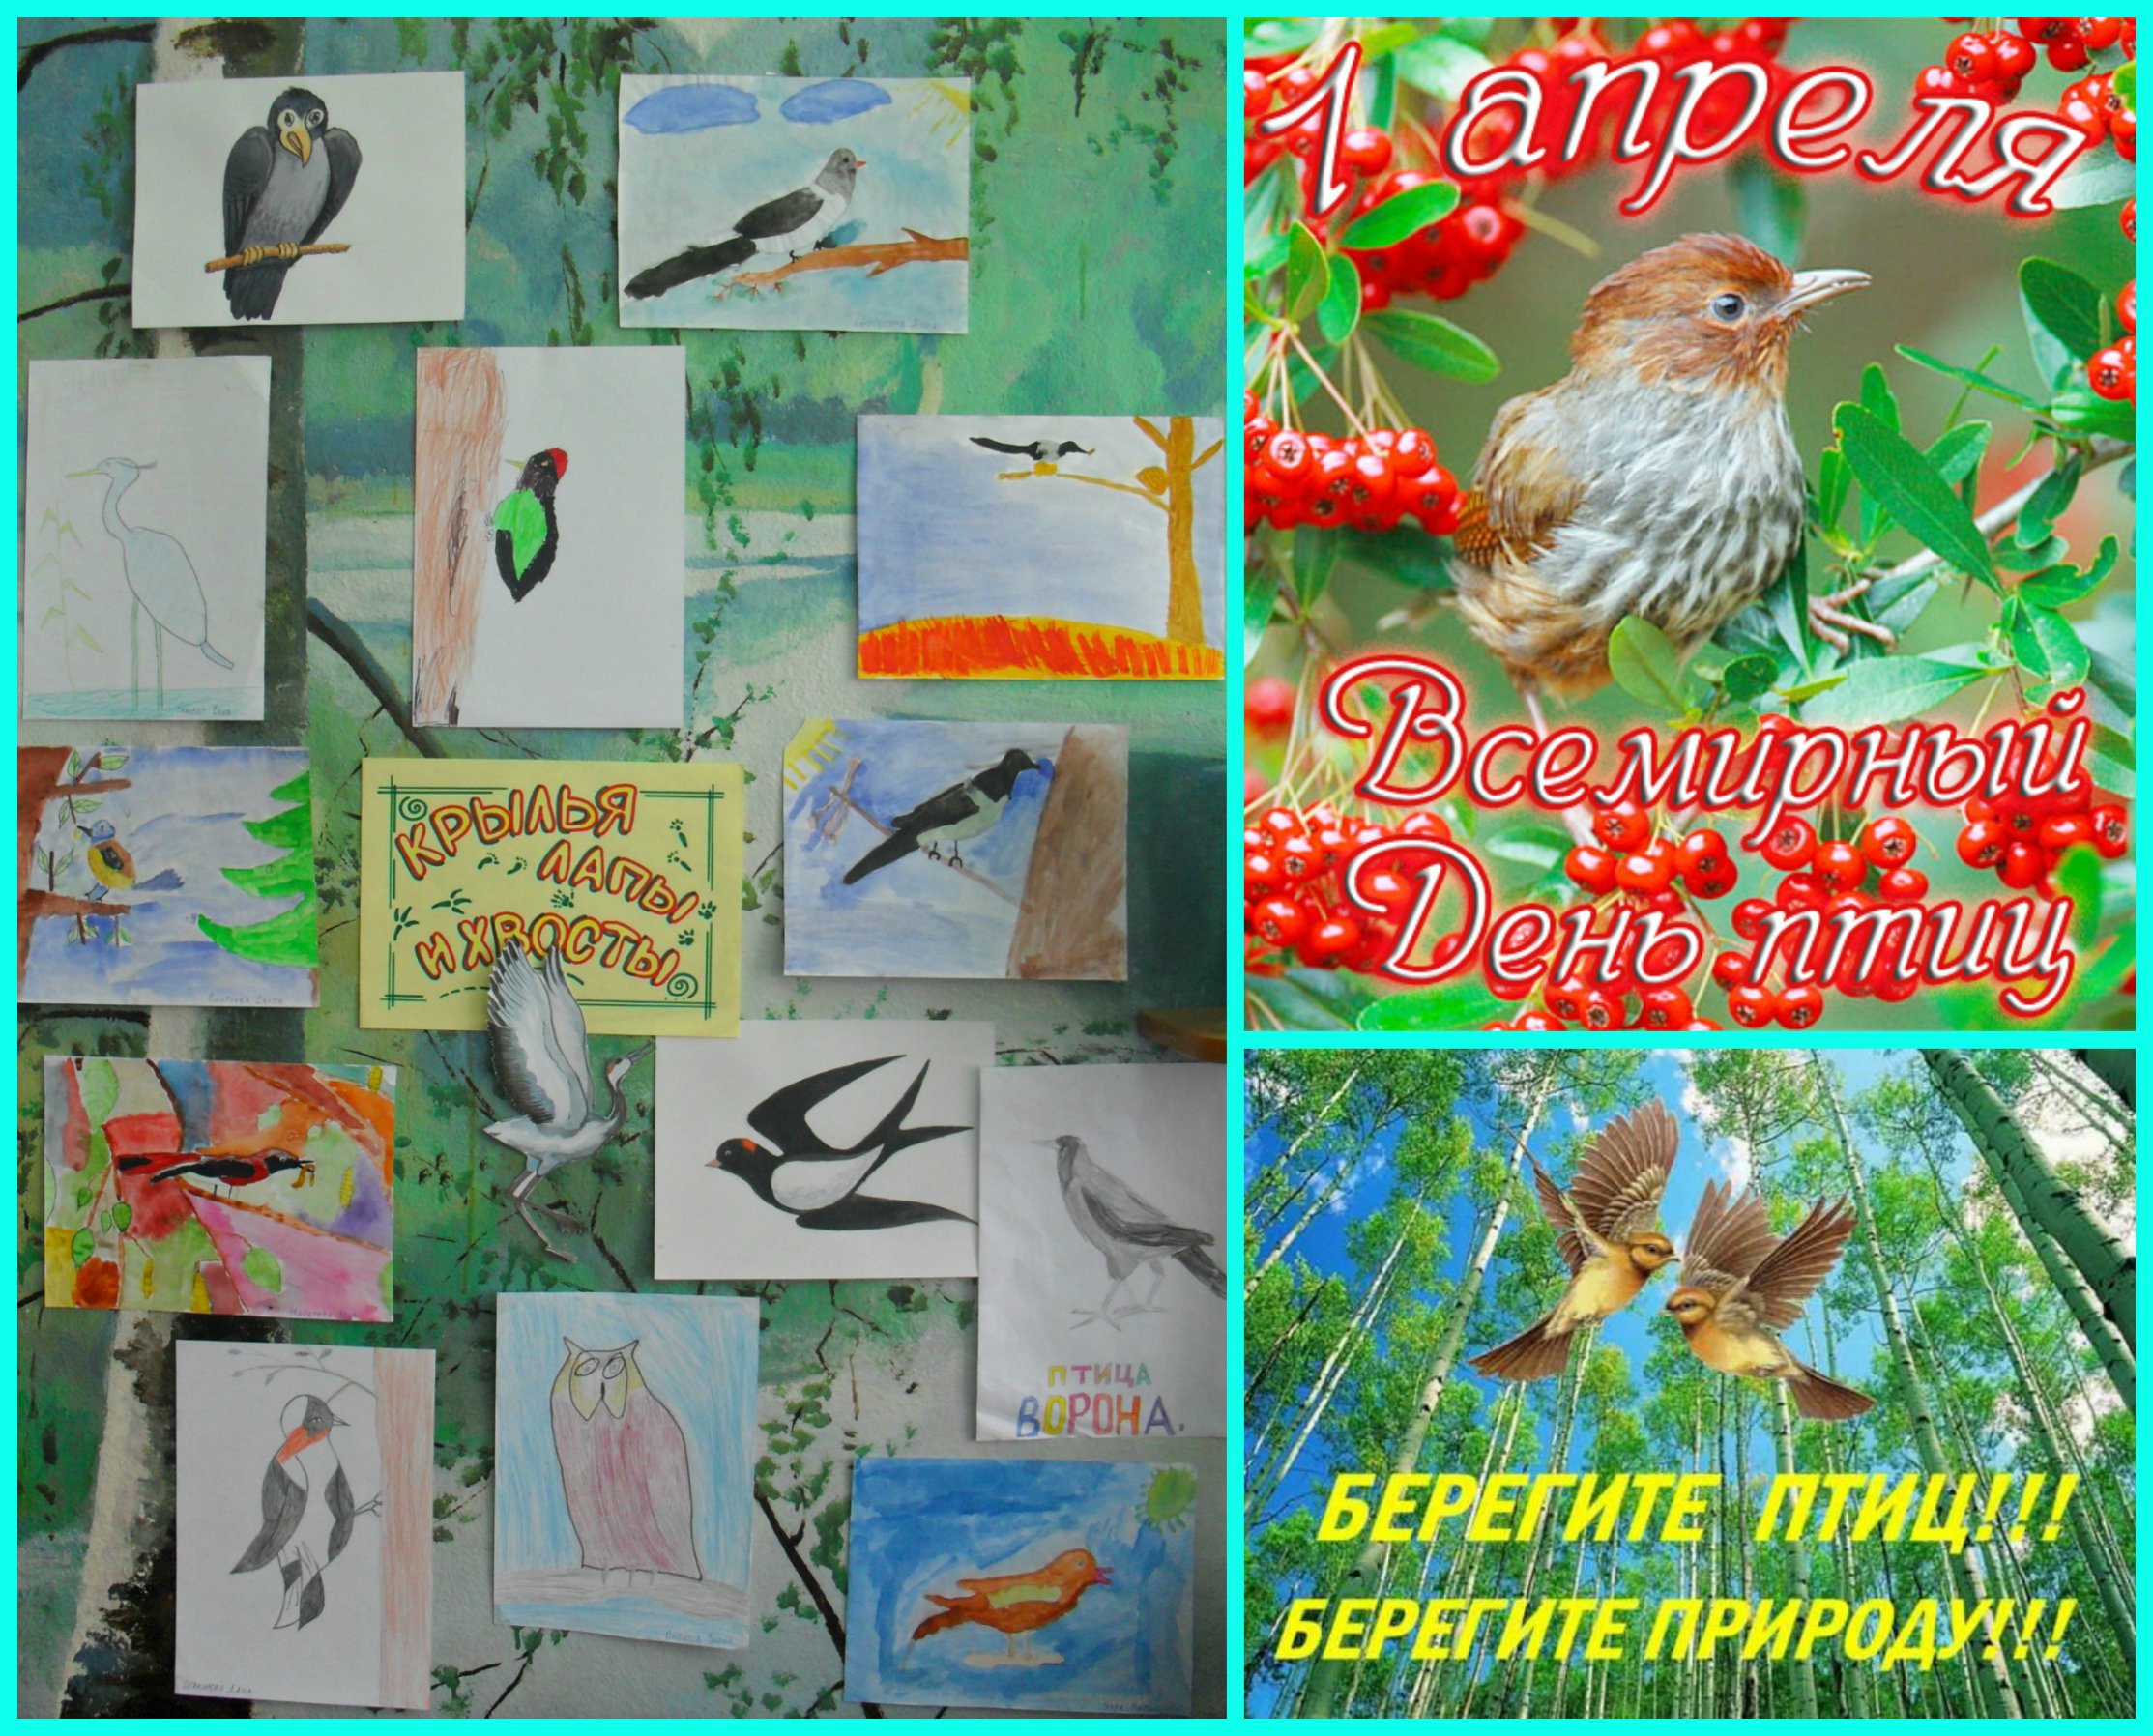 День птиц сценарий для детей. 1 Апреля день птиц. Международный день птиц плакат. День птиц мероприятия. Международный день птиц мероприятия.